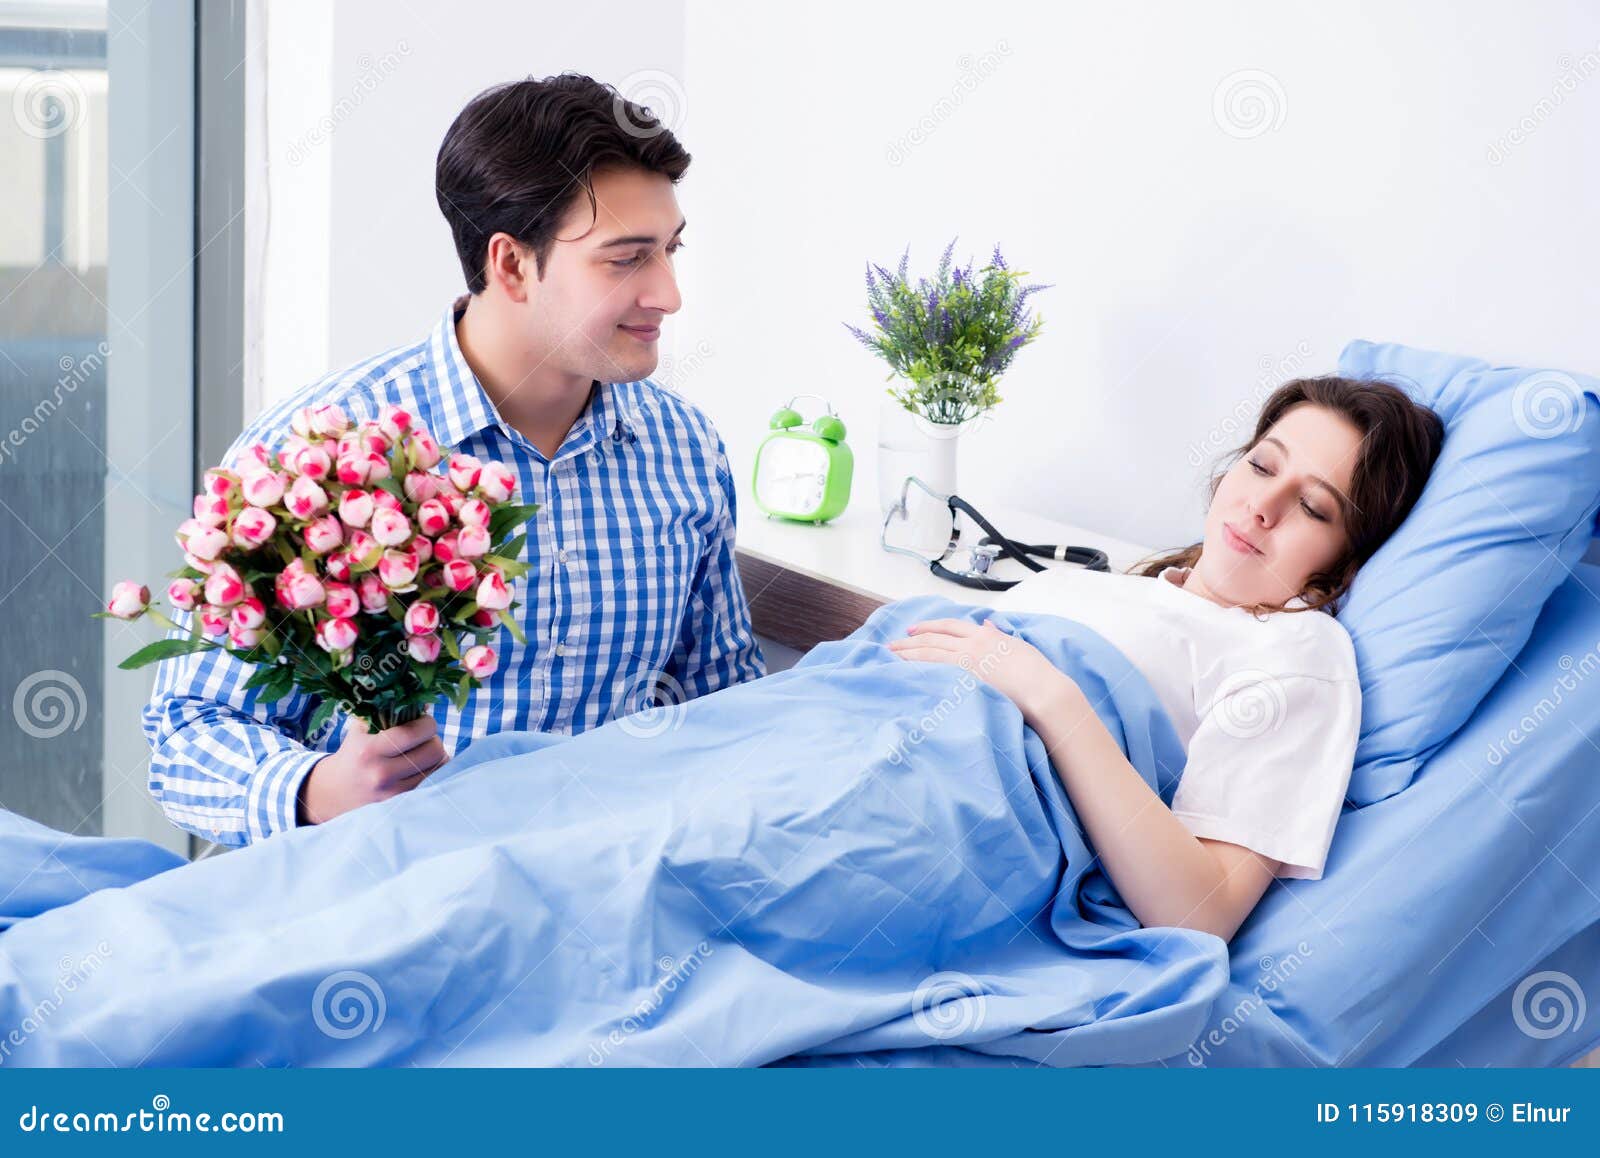 Жена навещает мужа. Жена навещает мужа в больнице. Мужчина навещает женщину в больнице. Муж рядом с женой в больнице.